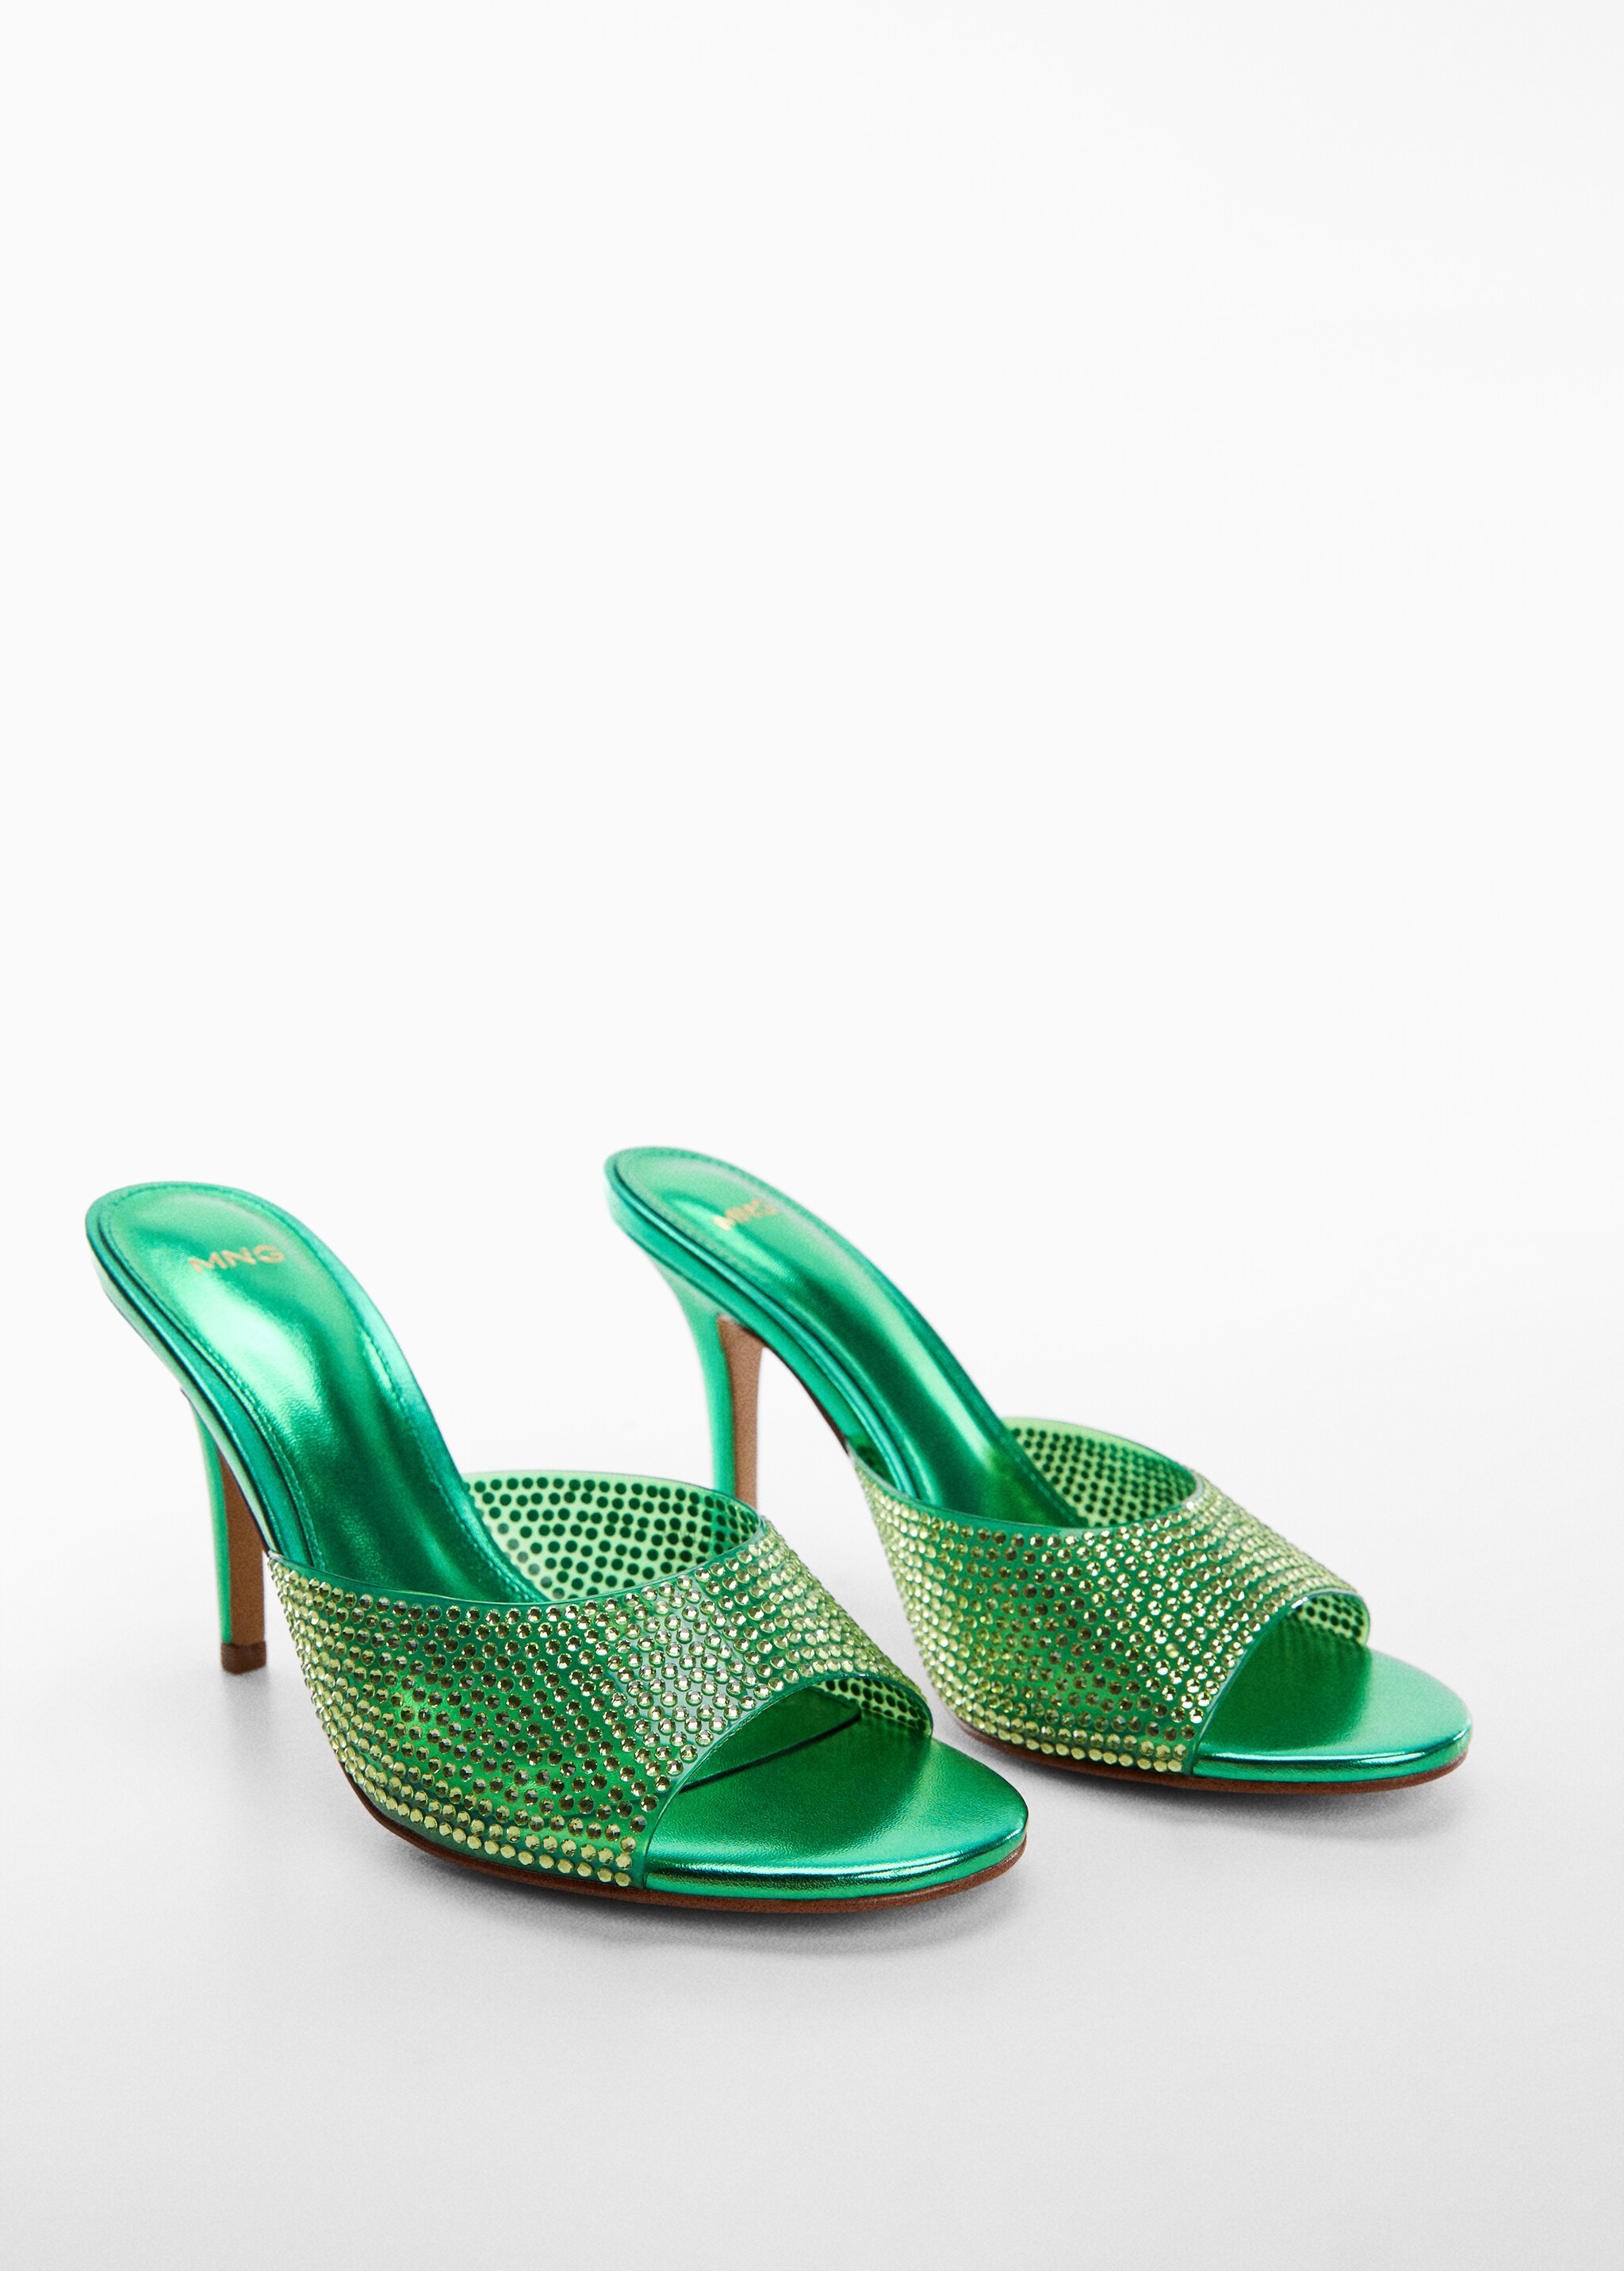 Glitter high-heeled sandals - Medium plane